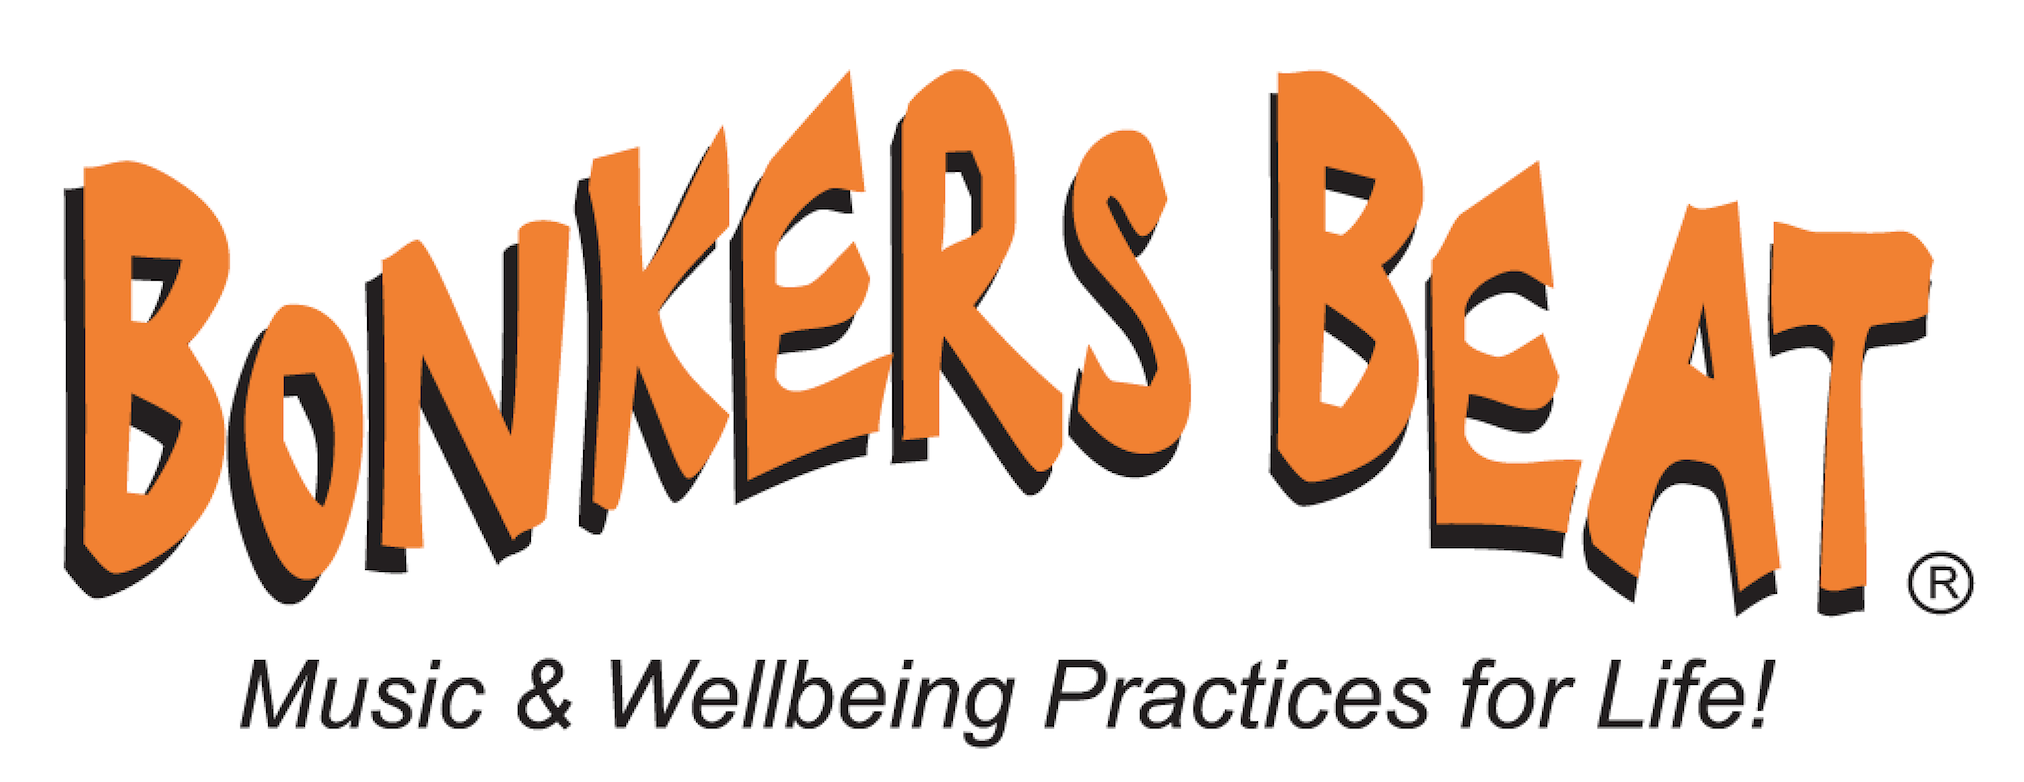 BonkersBeat_Logo